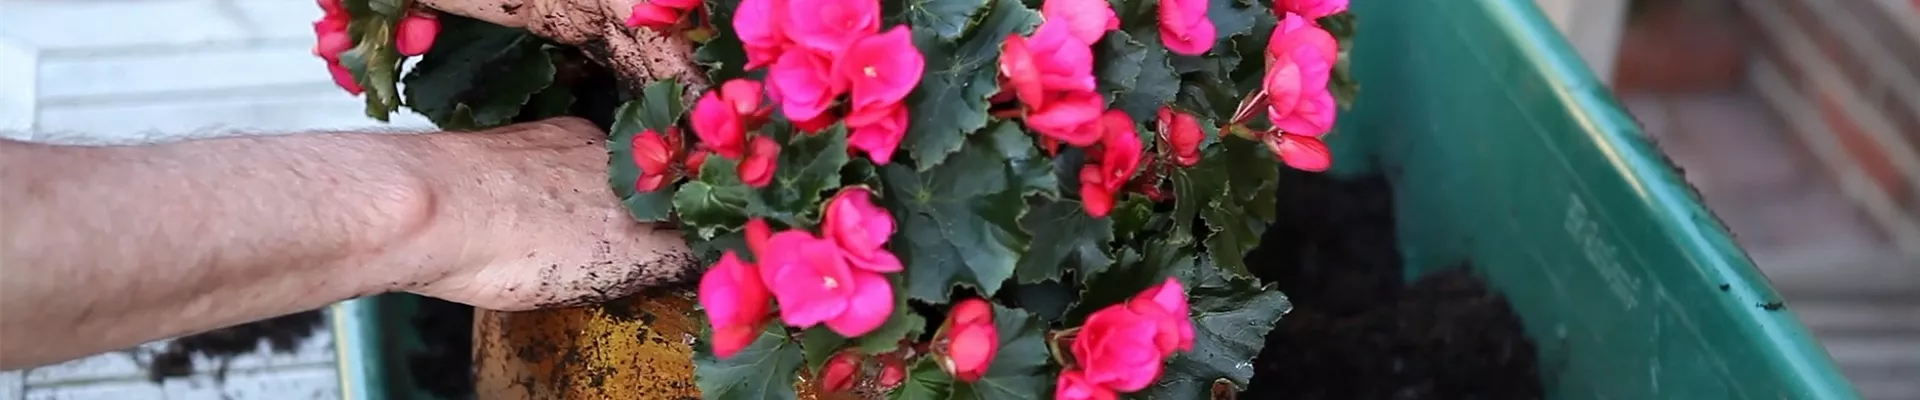 Betulia - Einpflanzen im Blumenkübel (thumbnail).jpg